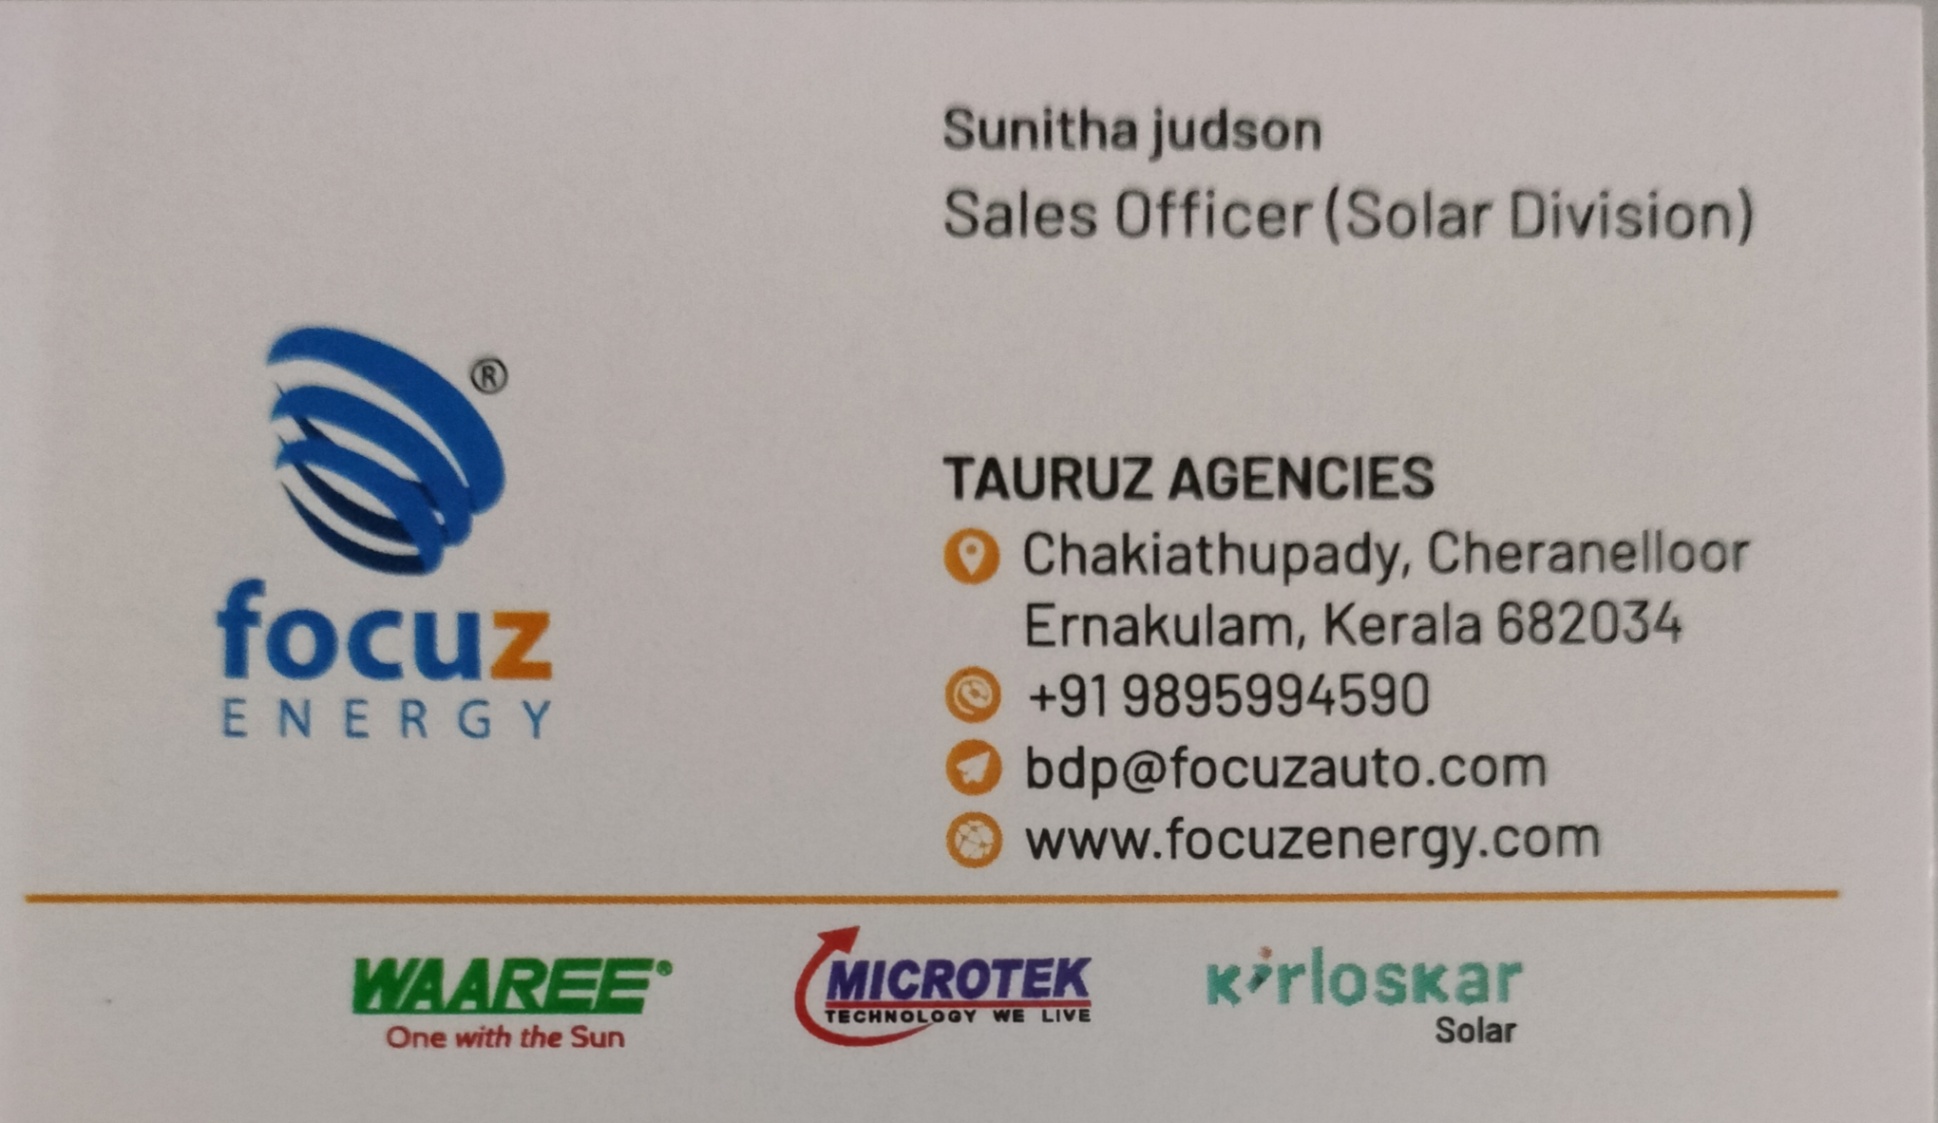 Distributor of microtek solar panel 